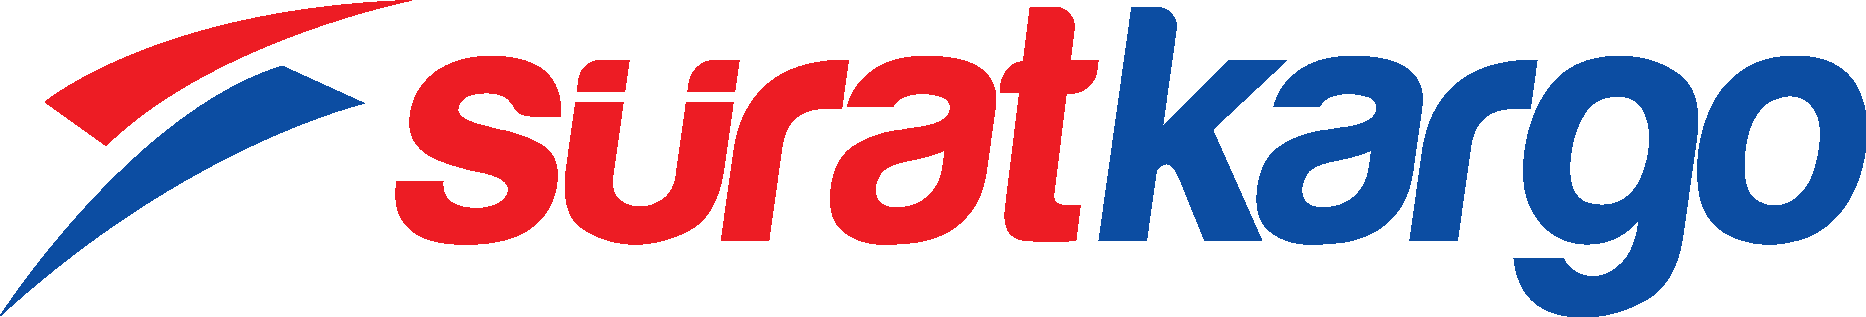 SÜRAT KARGO Logo Vector - (.Ai .PNG .SVG .EPS Free Download)